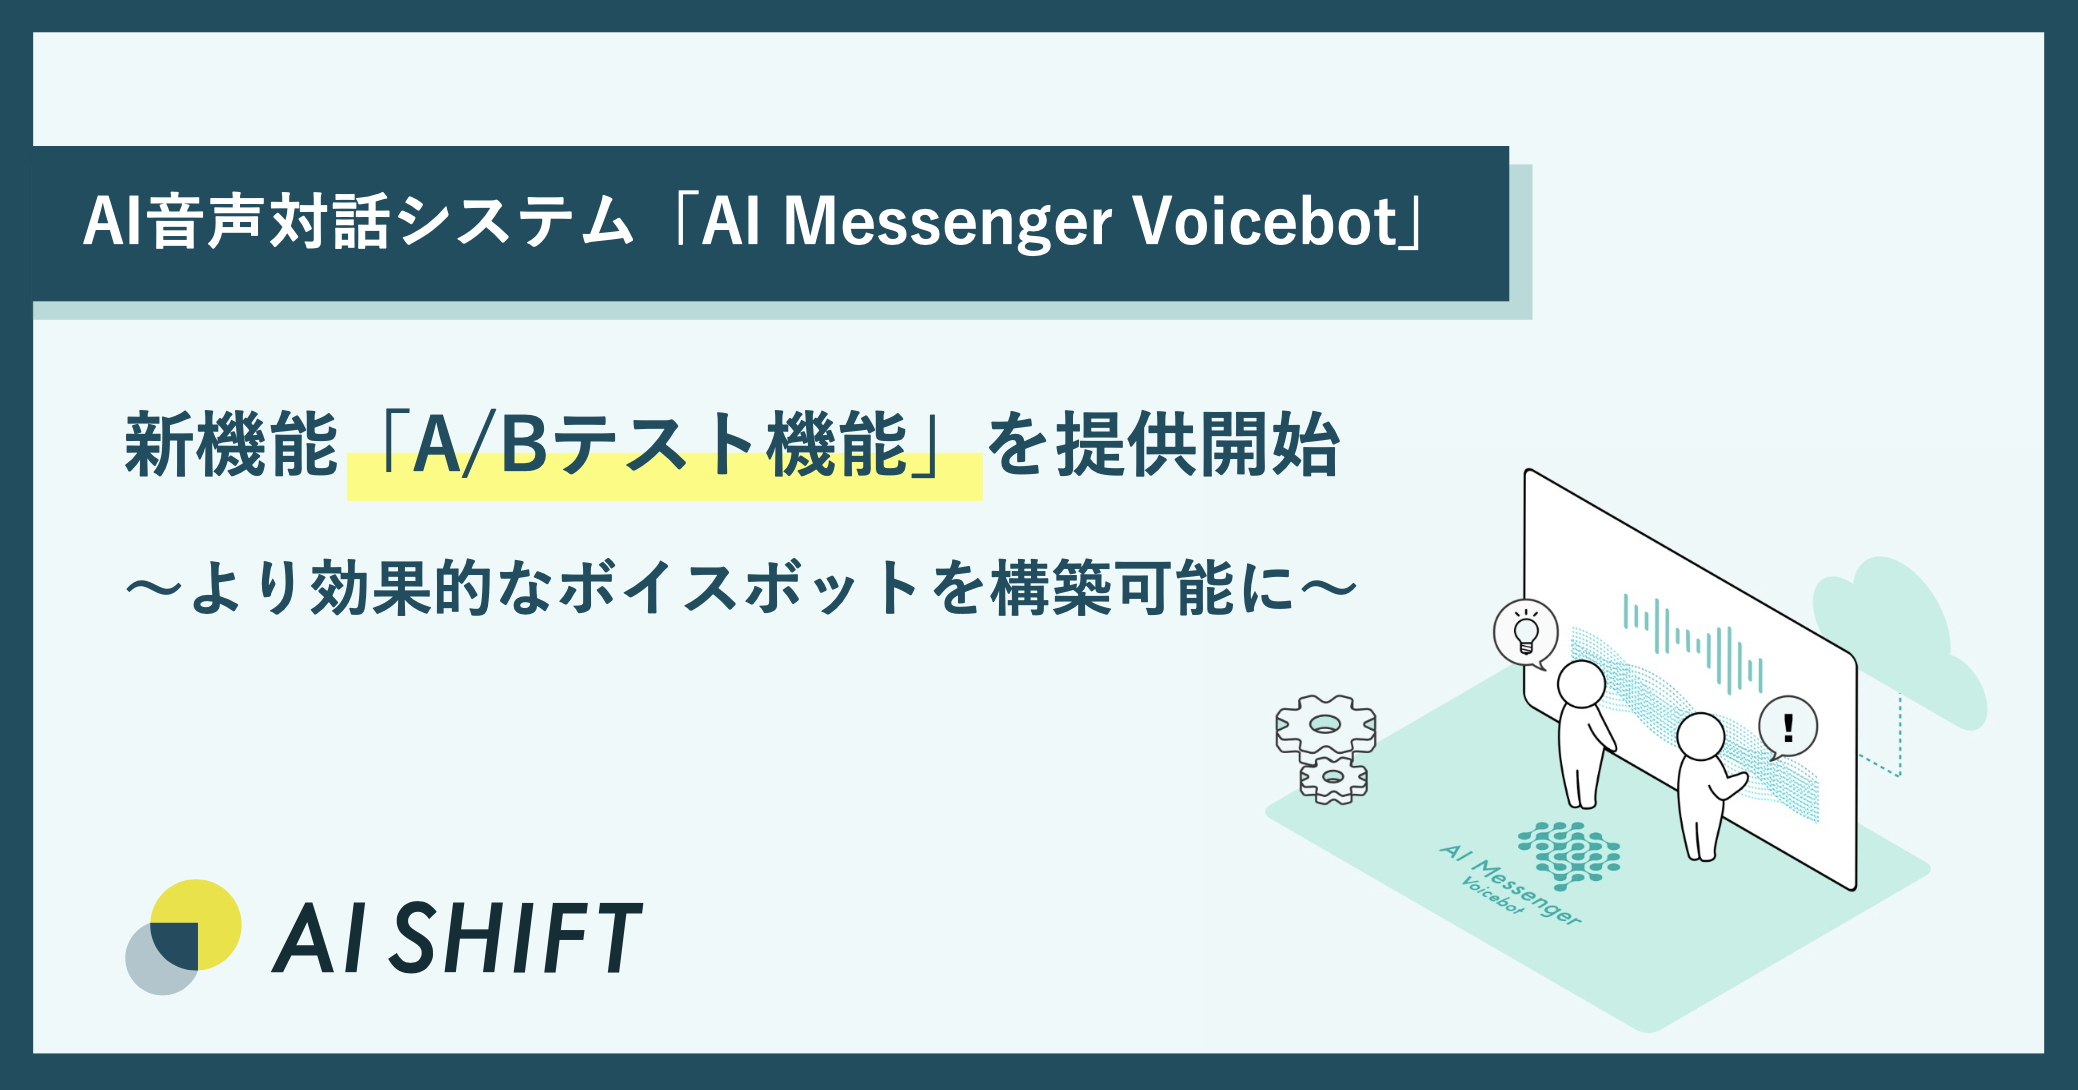 AI Messenger Voicebotにて新機能「A/Bテスト機能」を提供開始 〜より効果的なボイスボットを構築可能に〜